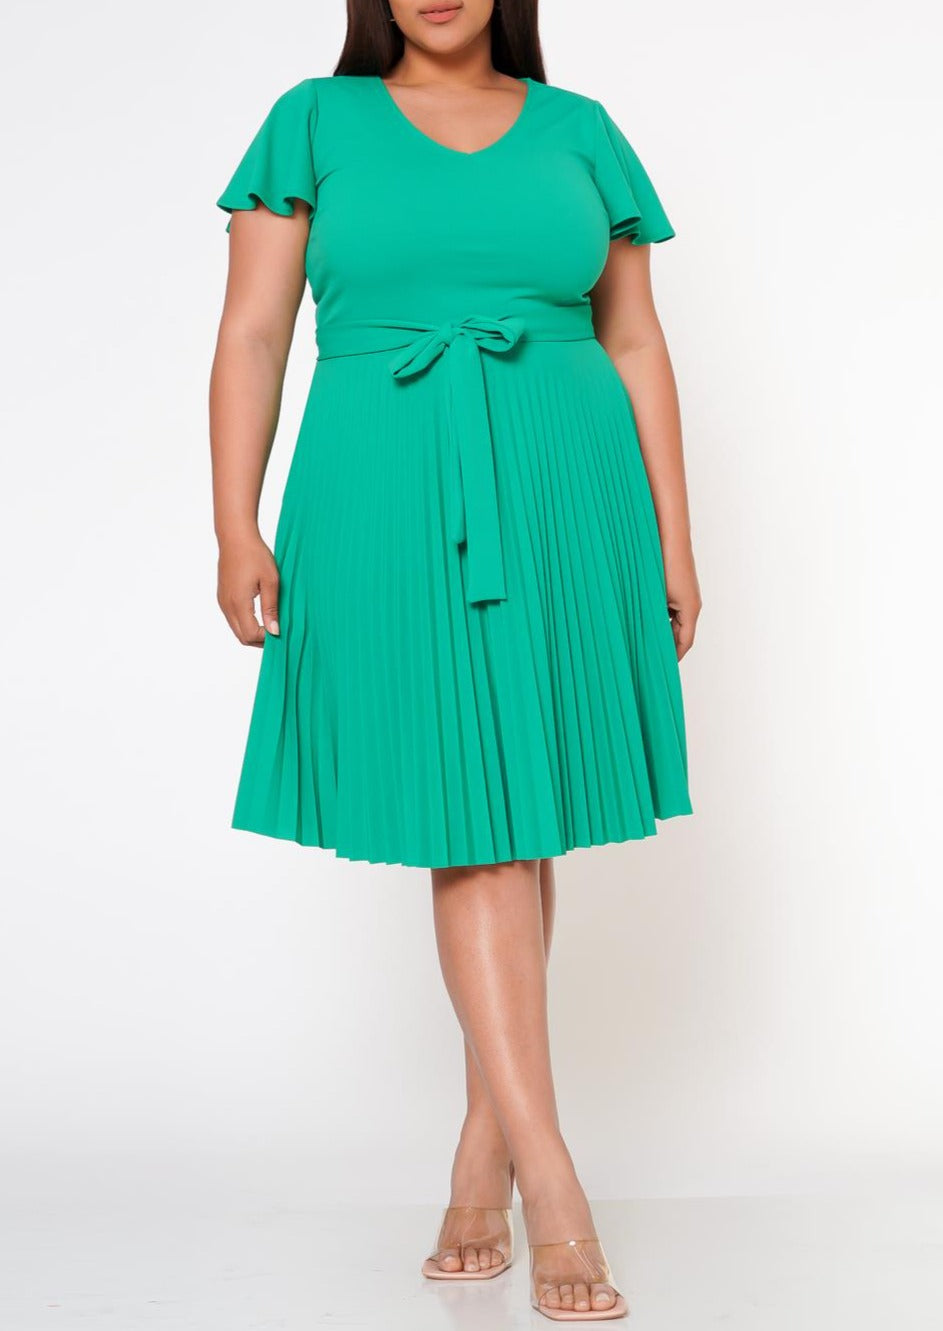 HI Curvy Plus Size Women Pleated Flare Mini Dress Made in USA